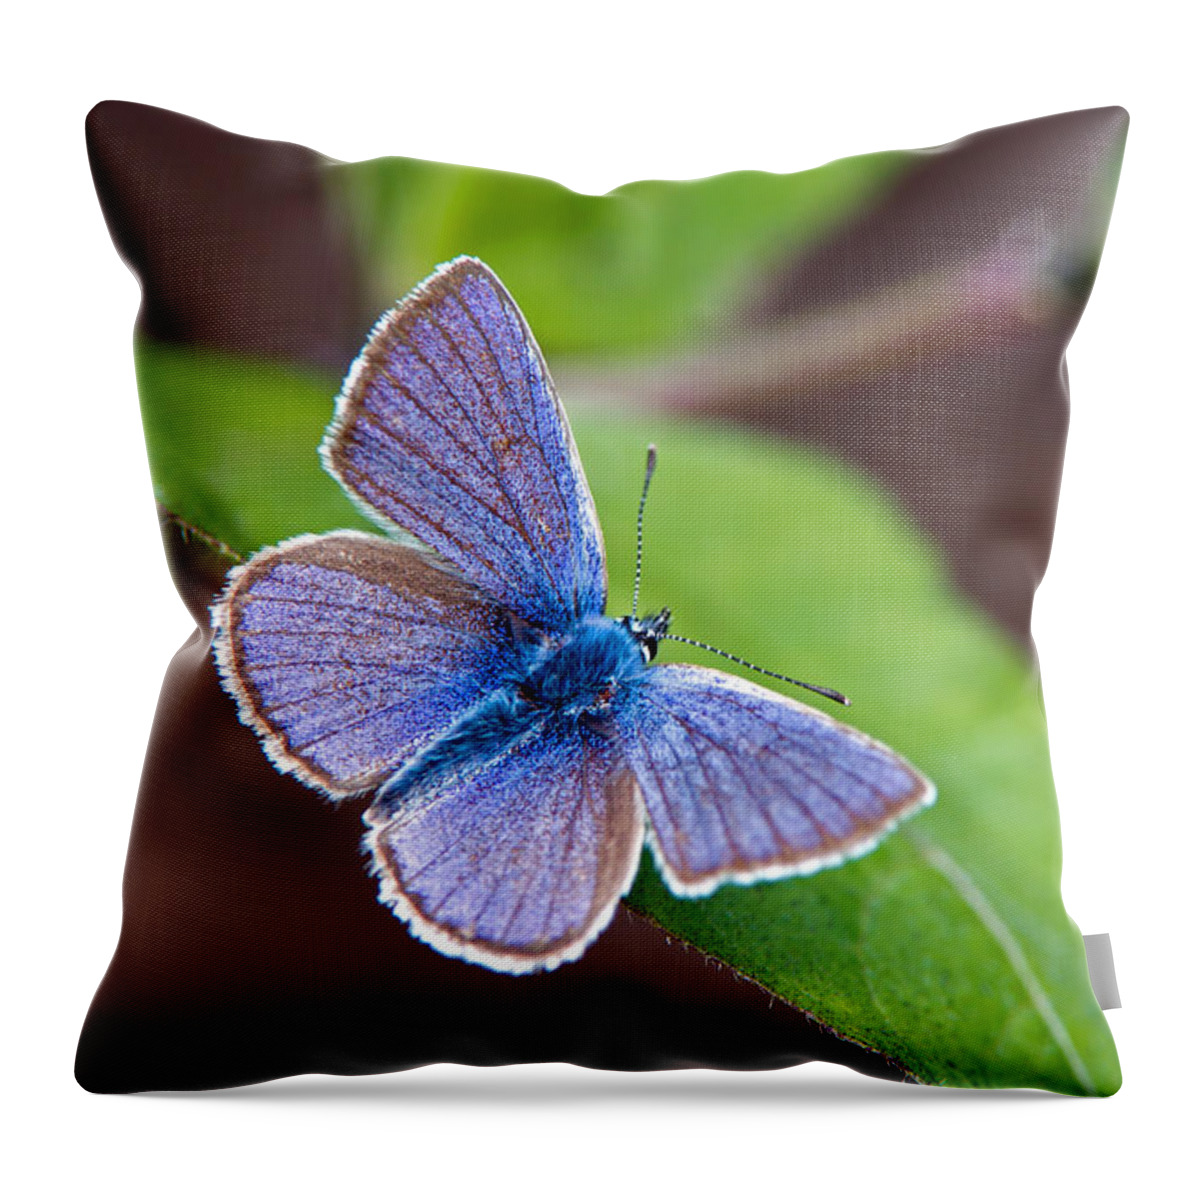 Mazarine Blue Throw Pillow featuring the photograph Mazarine Blue by Torbjorn Swenelius